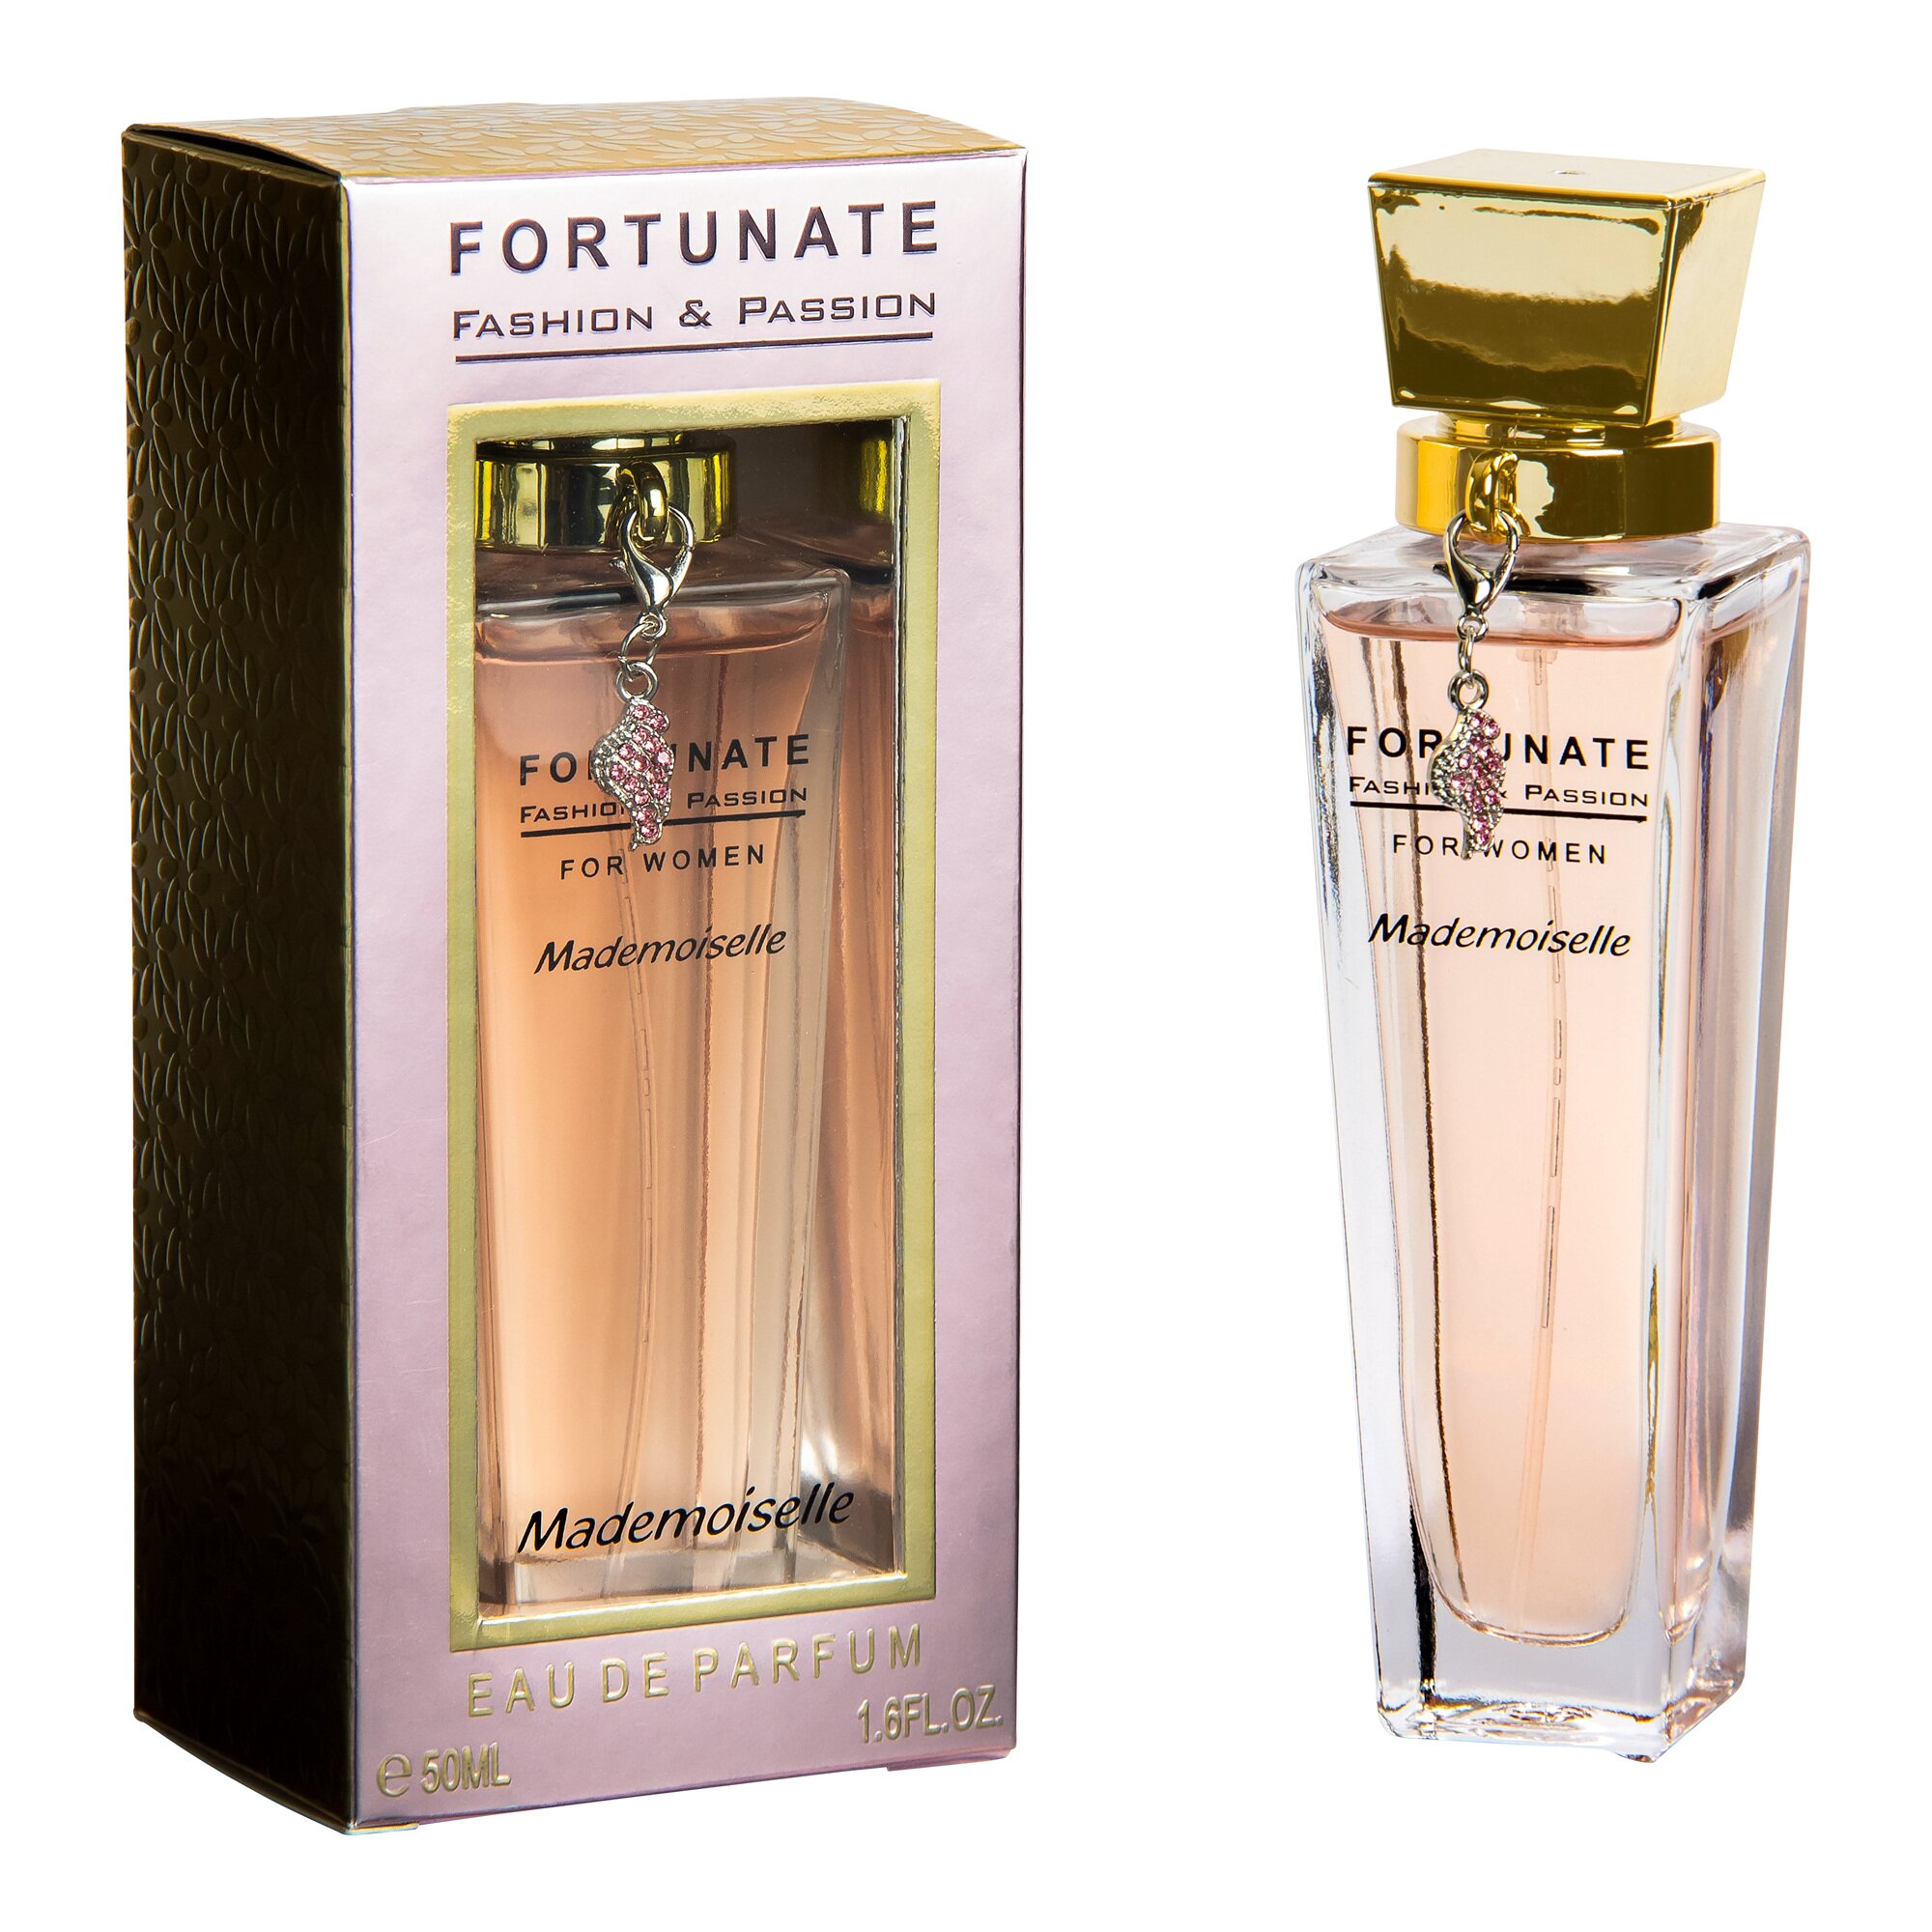 Image of Eau de parfum Mademoiselle, 50 ml